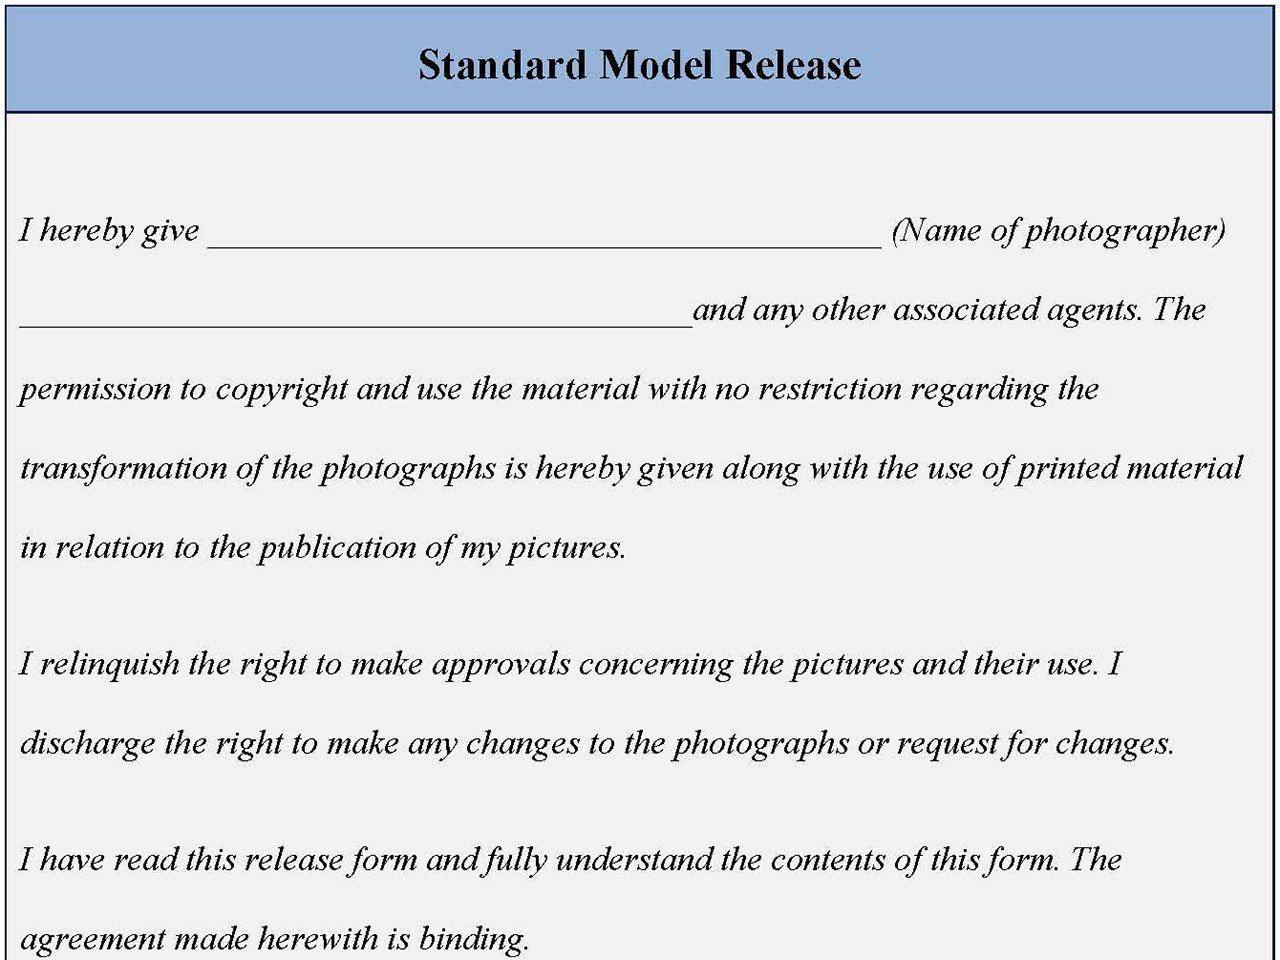 Standard Model Release Form